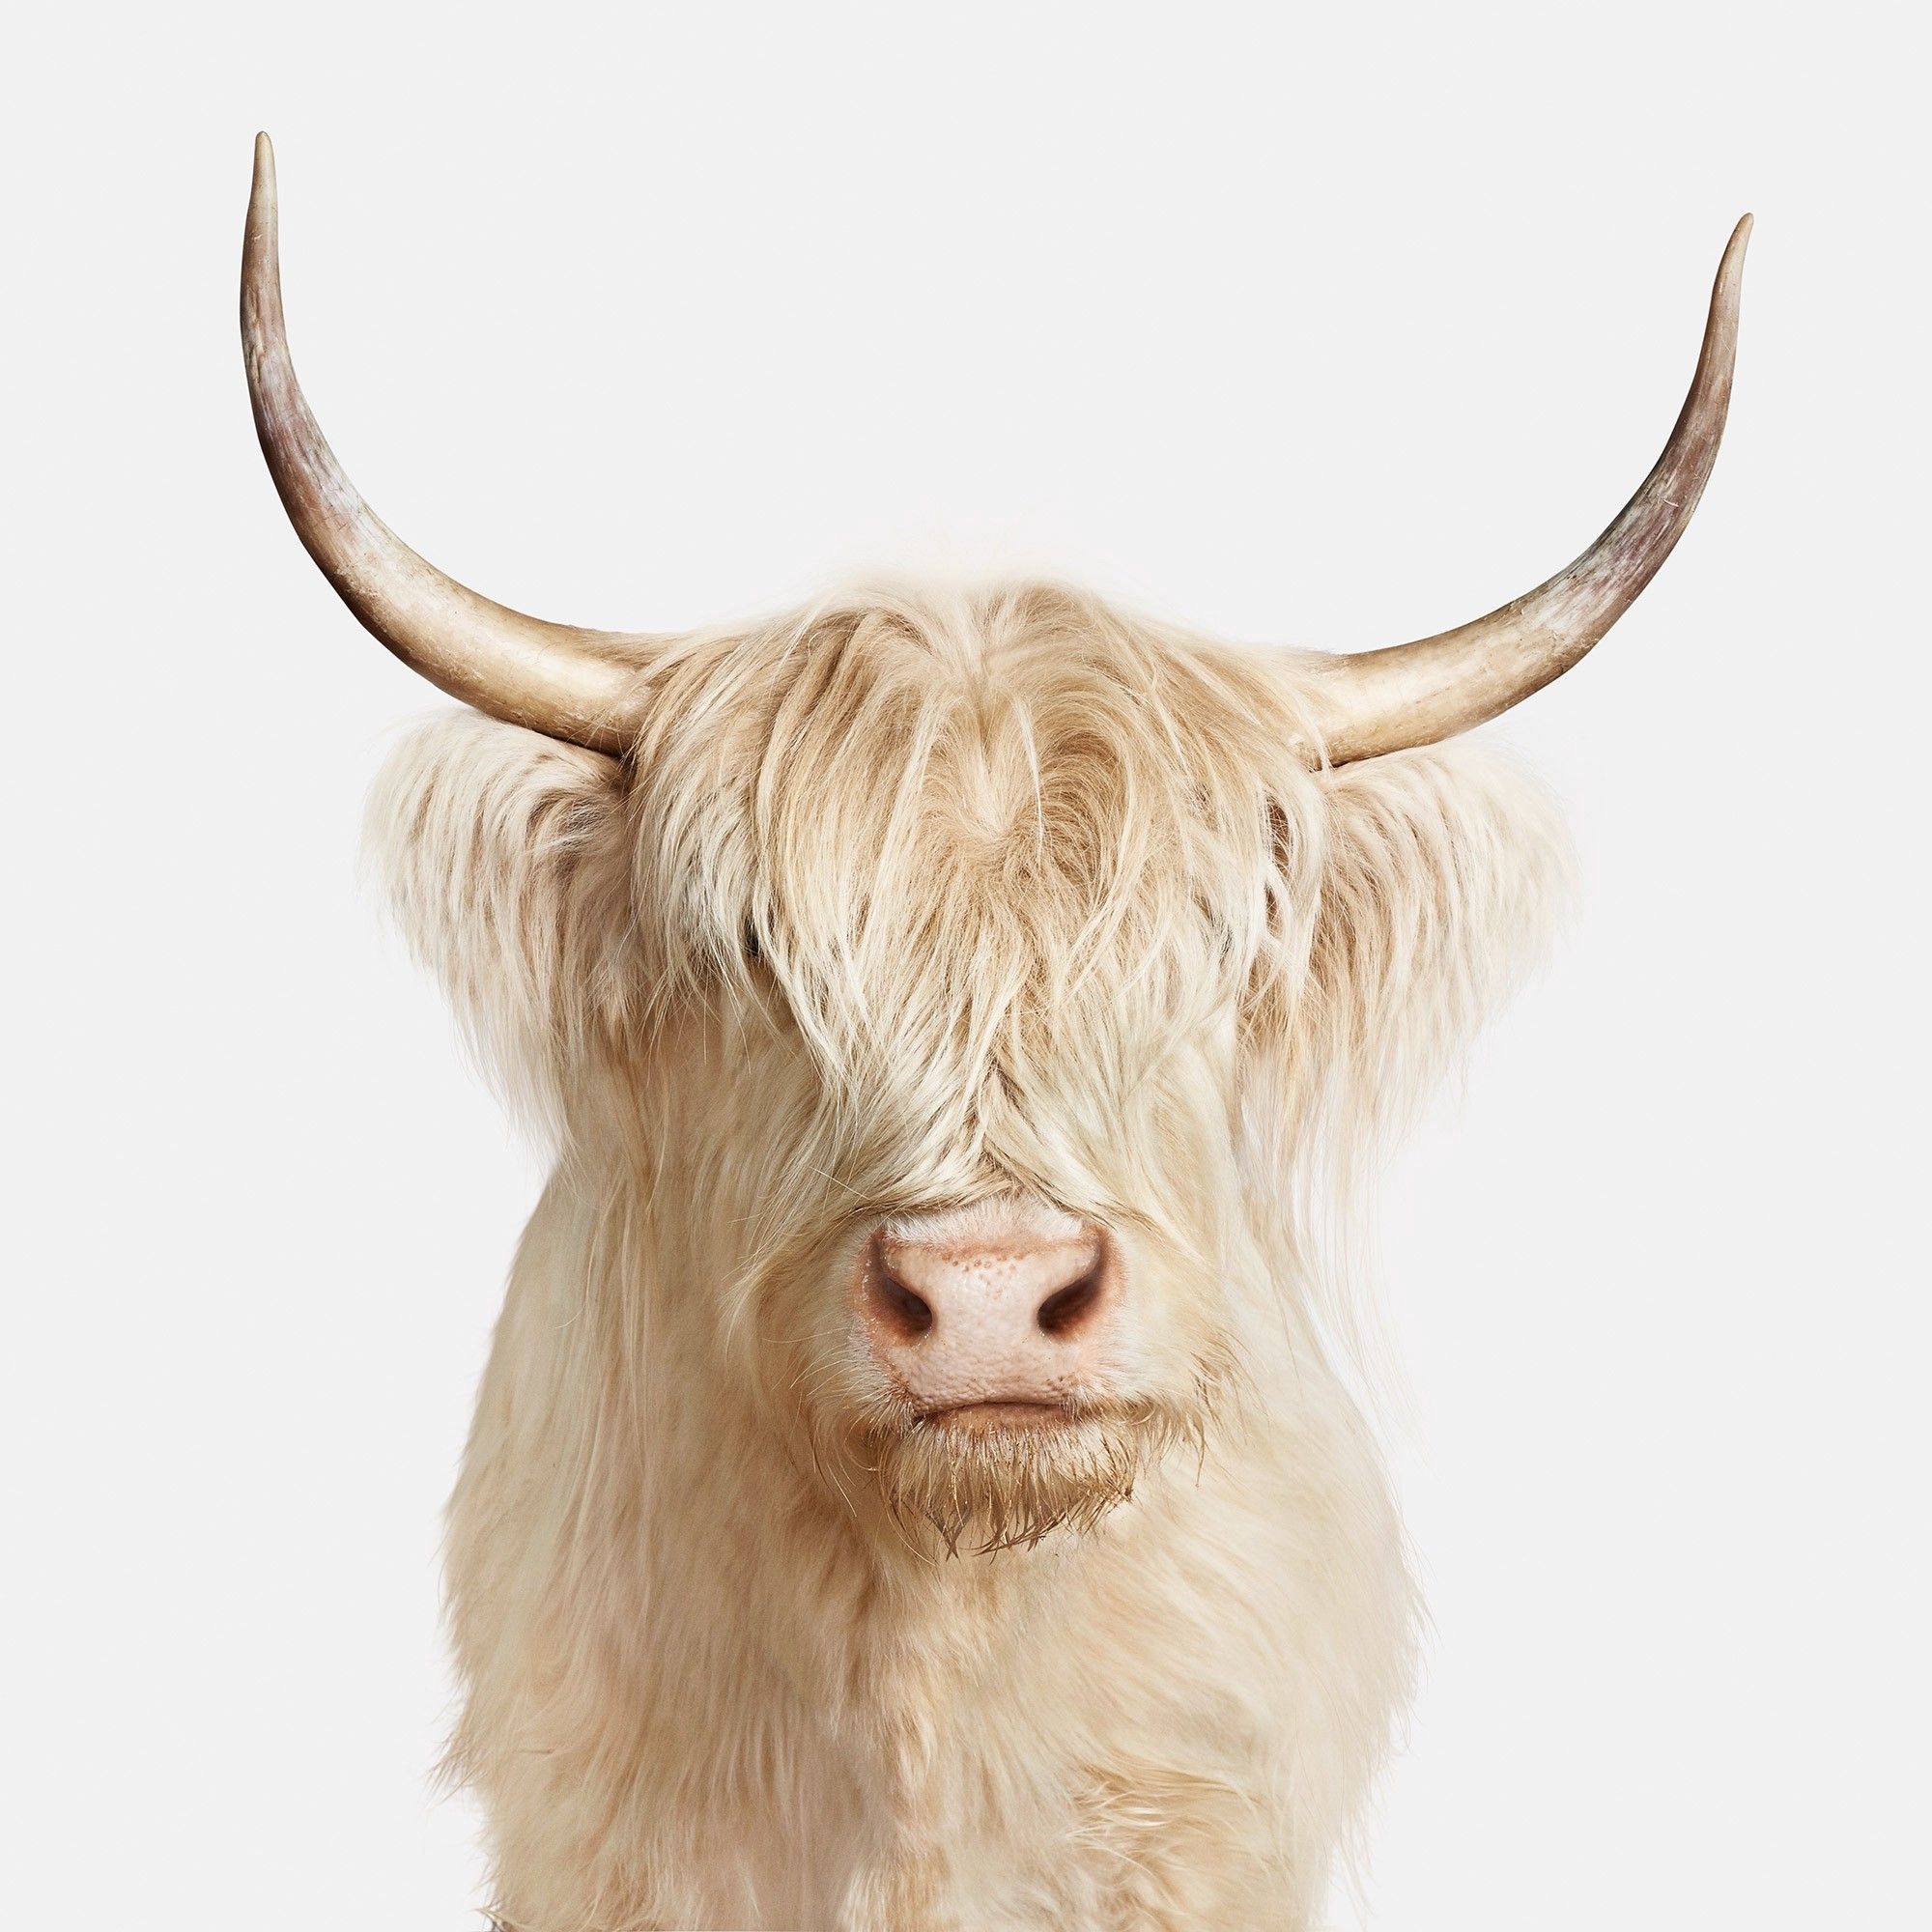 Fluffy cows, iPhone wallpaper ideas, Unique visuals, Animal cuteness, 2000x2000 HD Phone